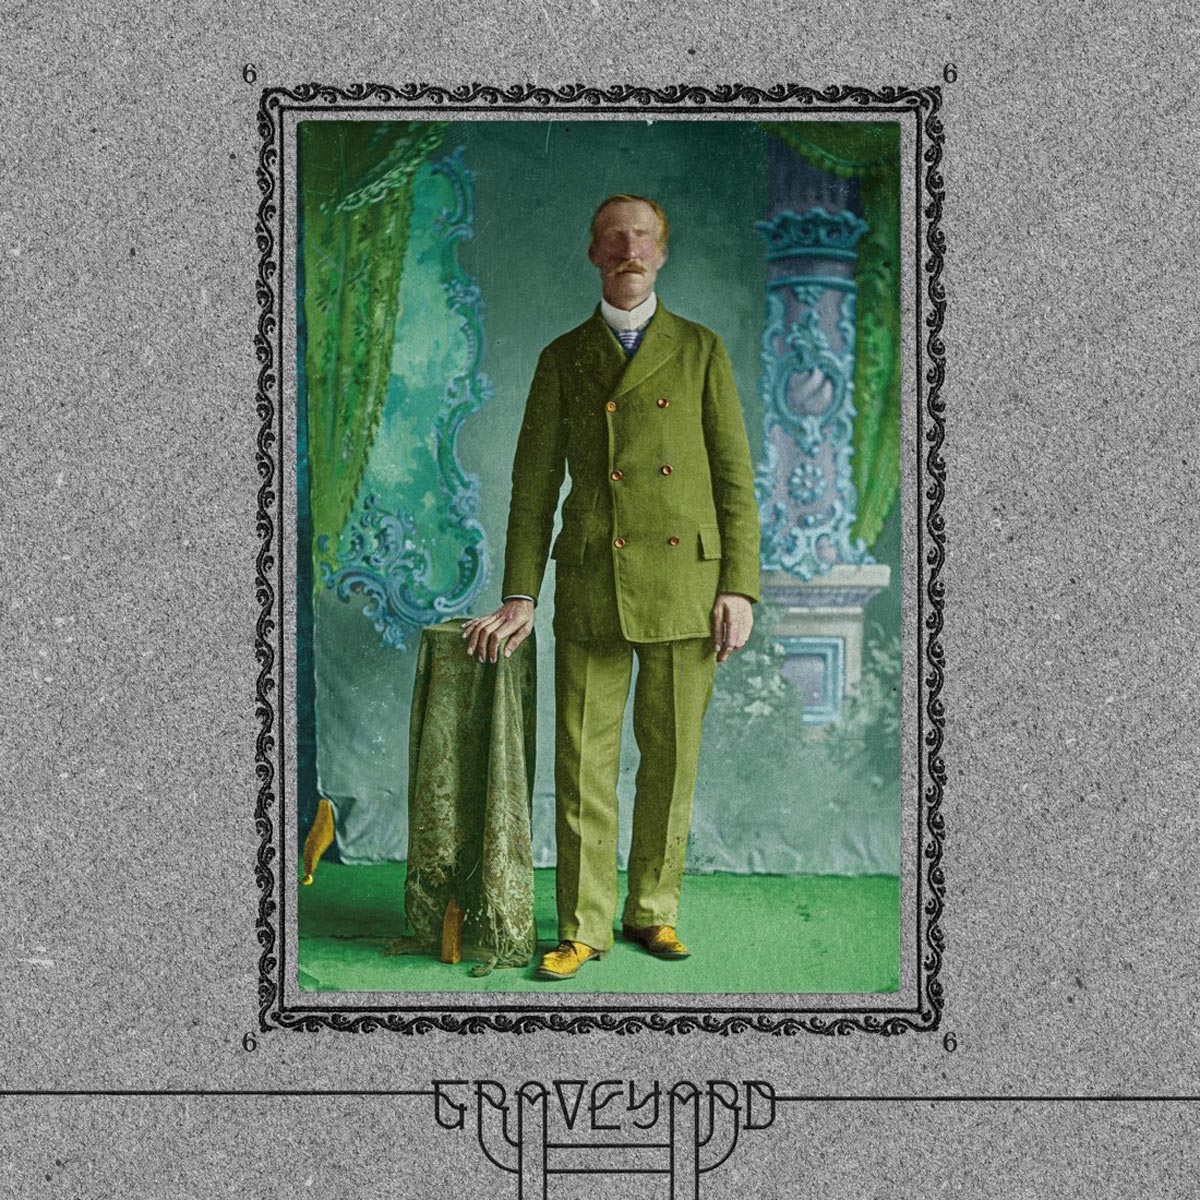 Graveyard - 6 (Green Transparent) - LP